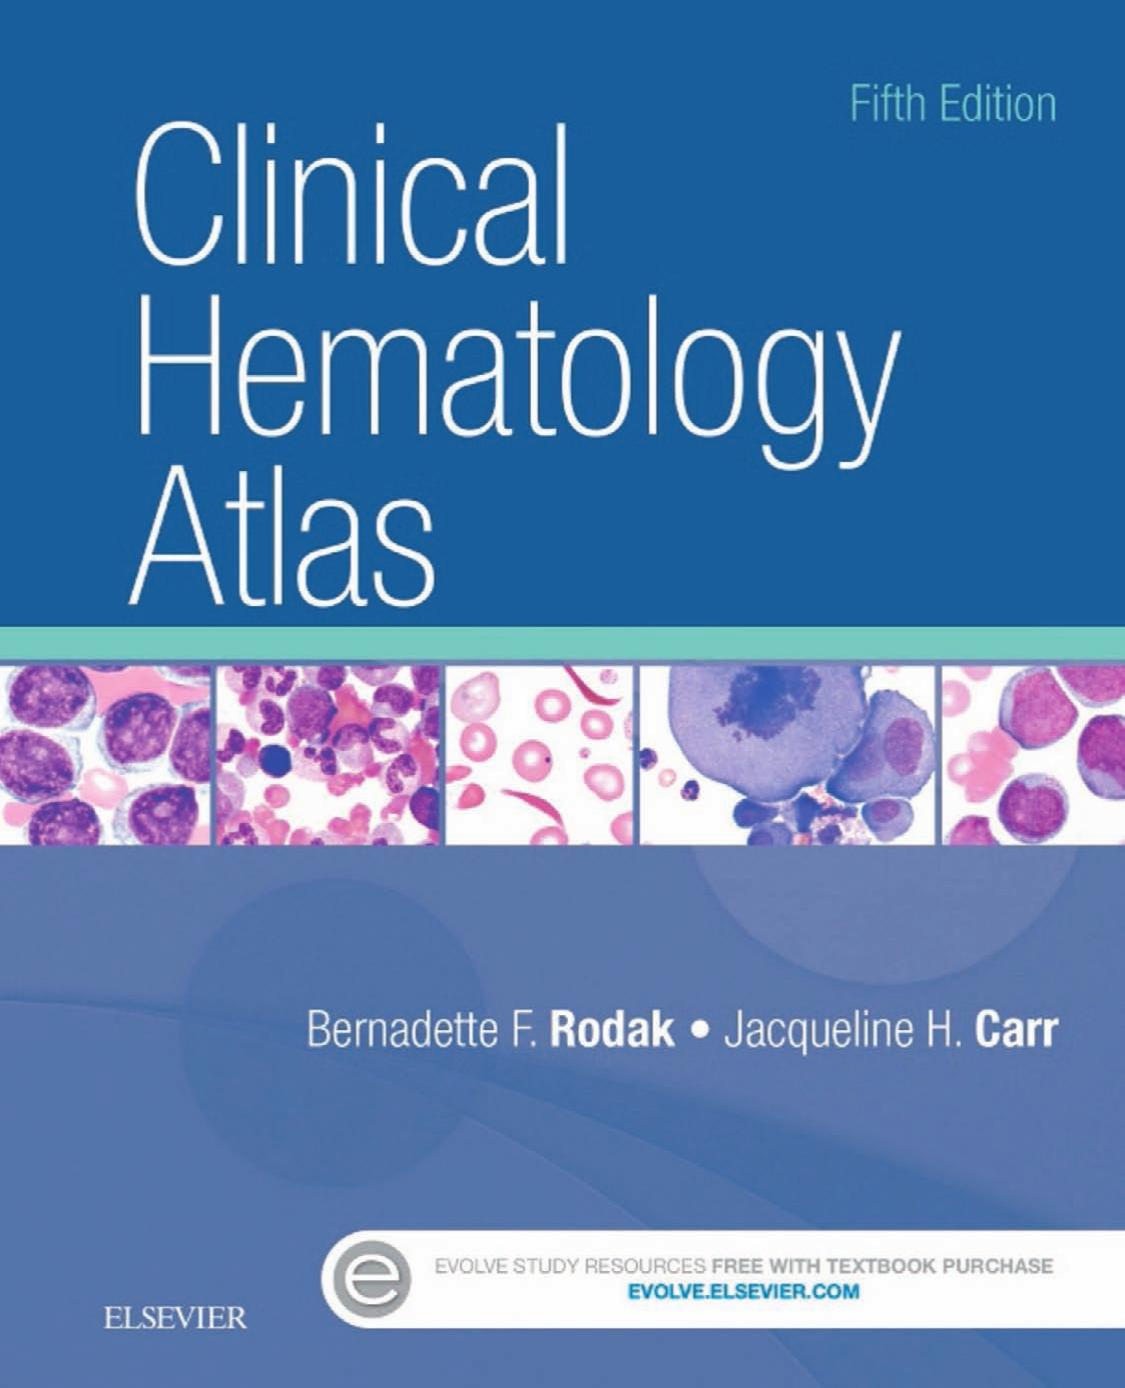 Clinical Hematology Atlas 5th Edition.jpg